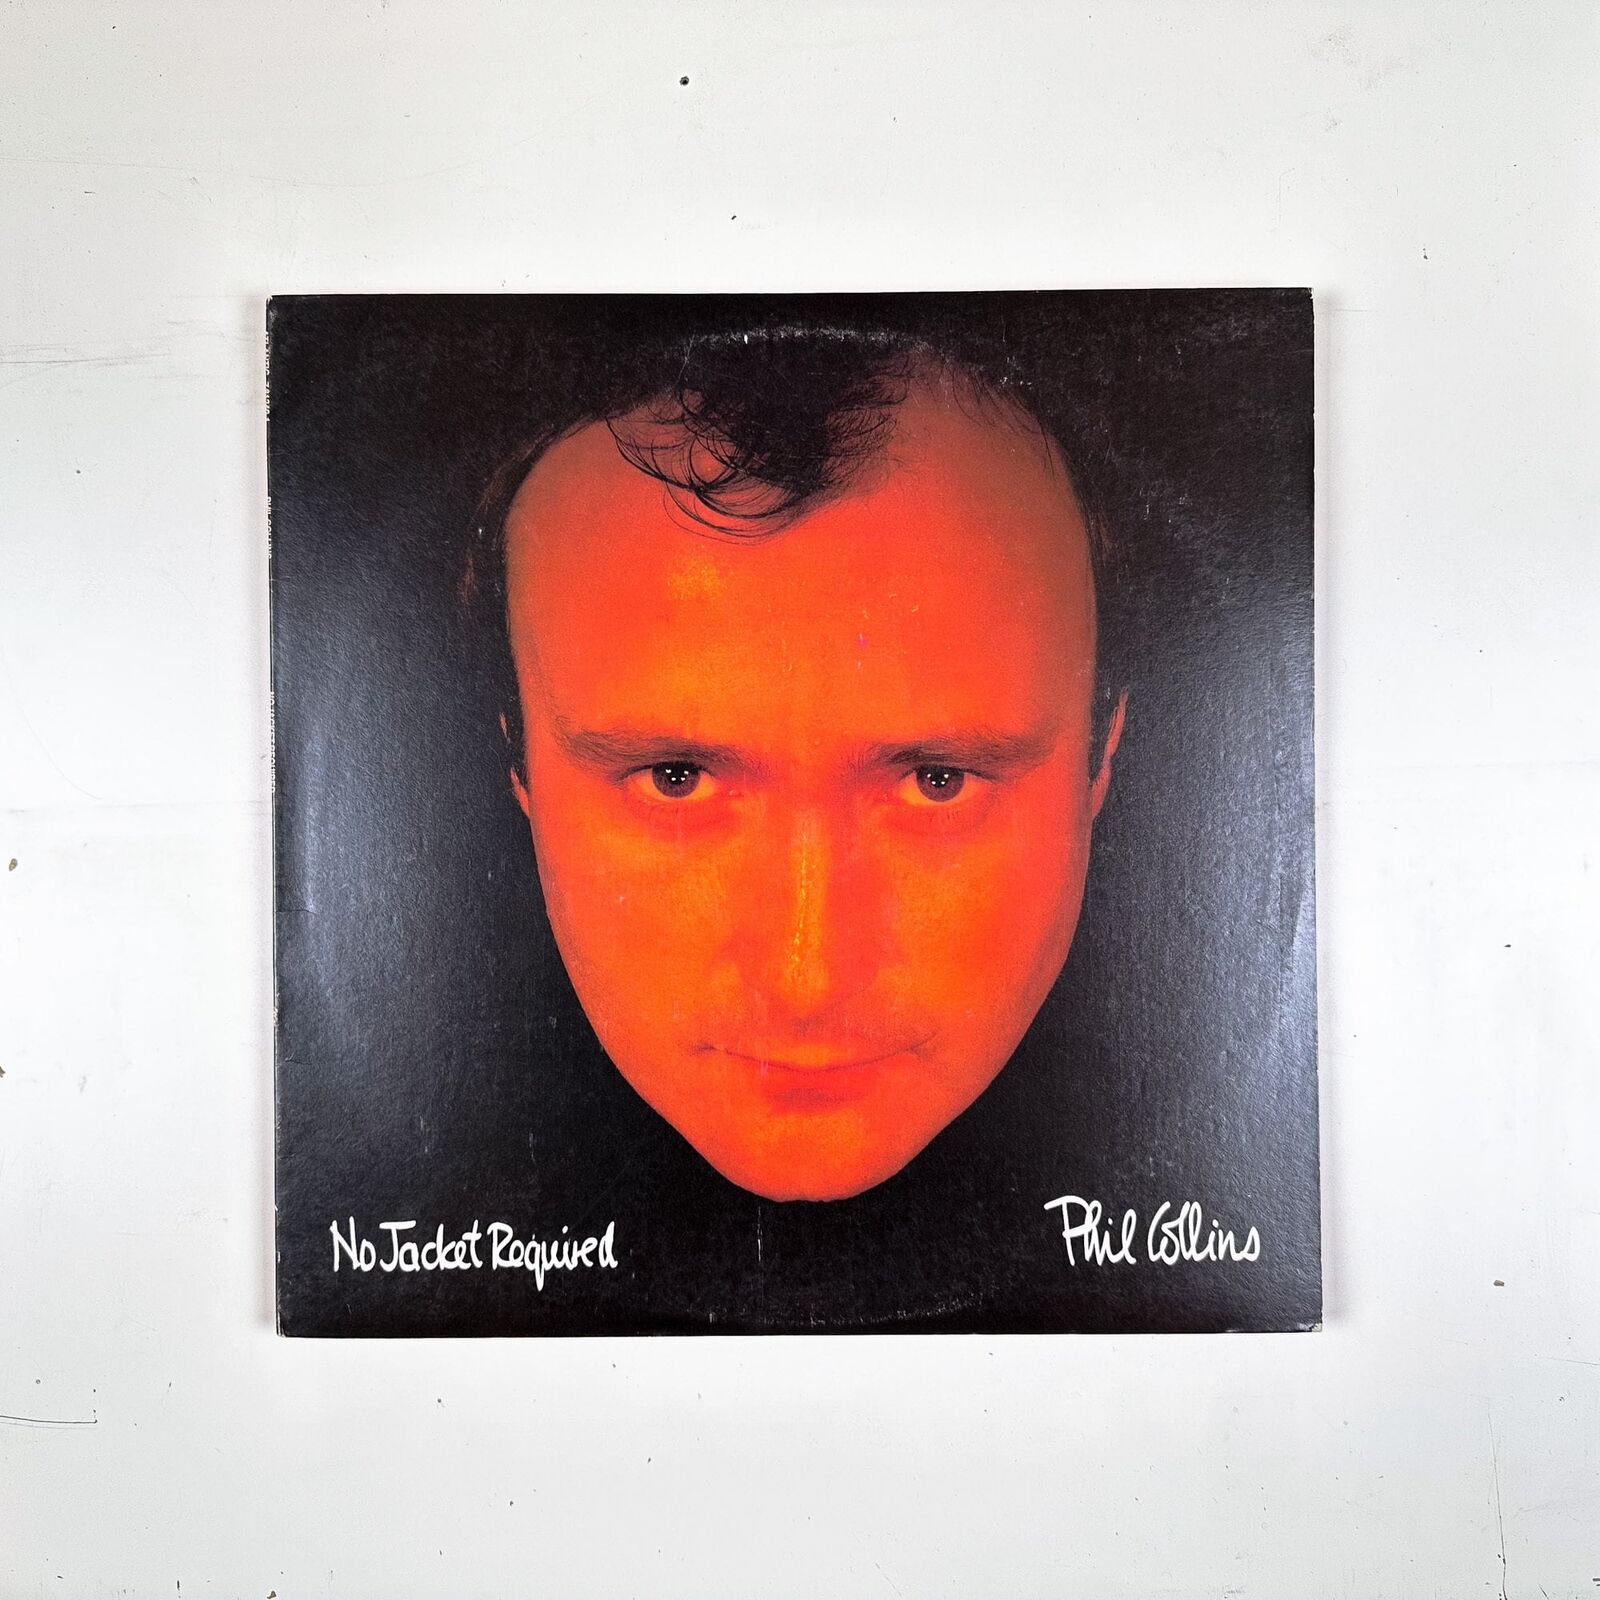 Phil Collins - No Jacket Required - Vinyl LP Record - 1985